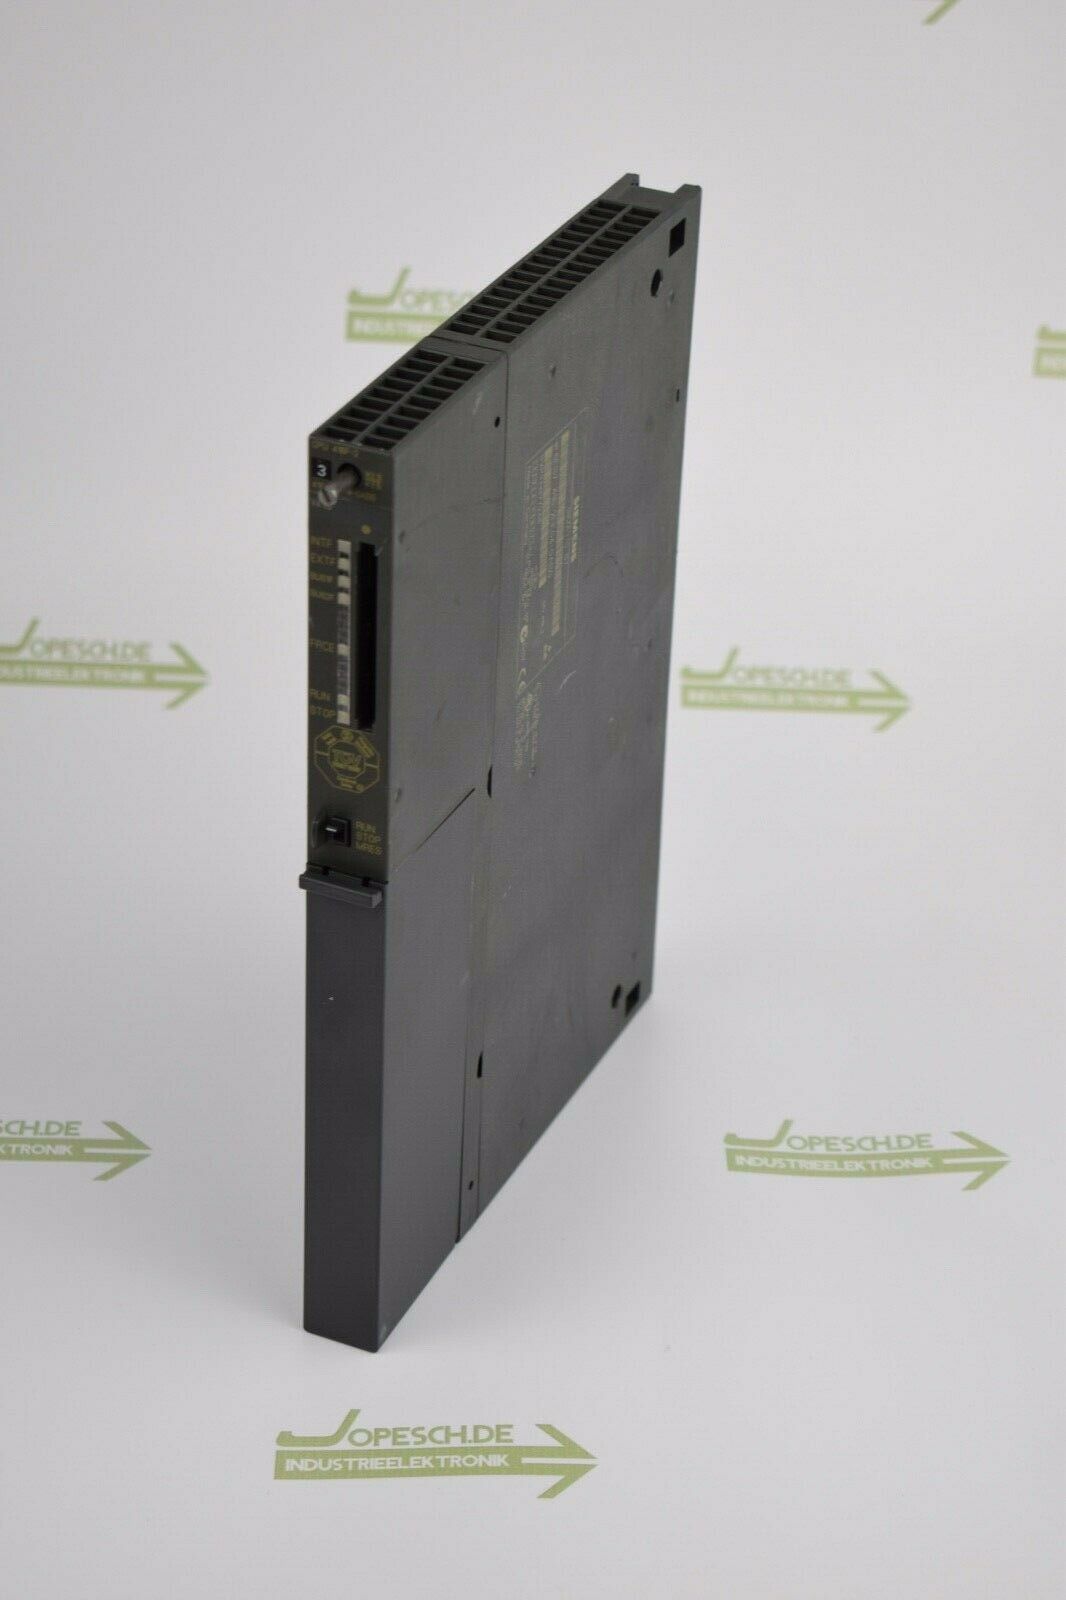 Siemens simatic S7-400 CPU 416F-2 6ES7 416-2FK04-0AB0 ( 6ES7416-2FK04-0AB0 )